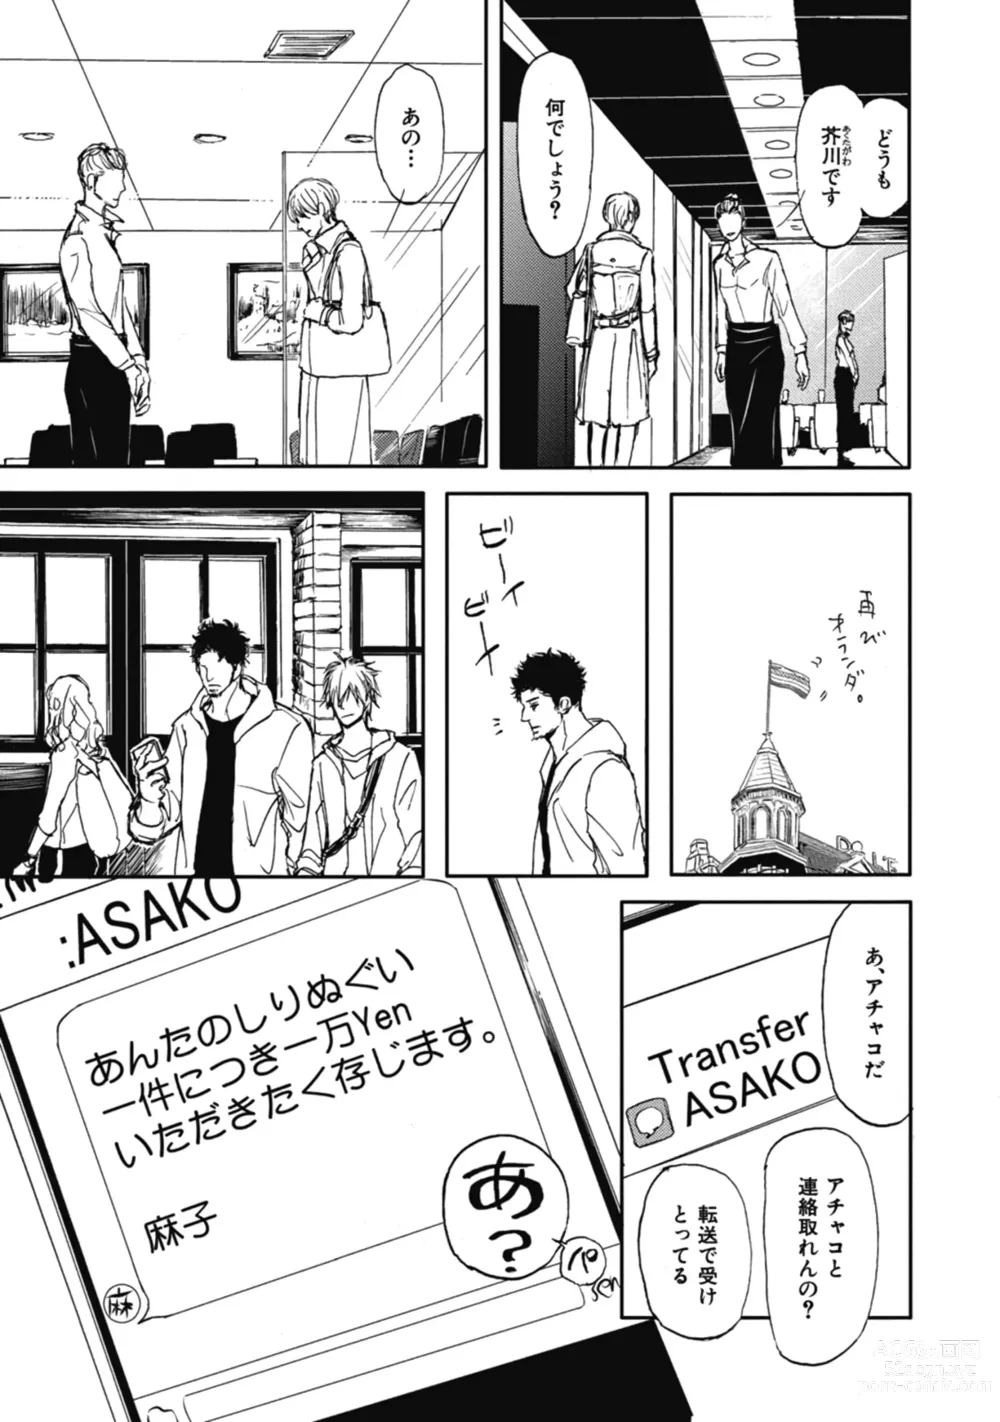 Page 15 of manga Papas Assassin. ~Futari Shite Tonde Yuku.~